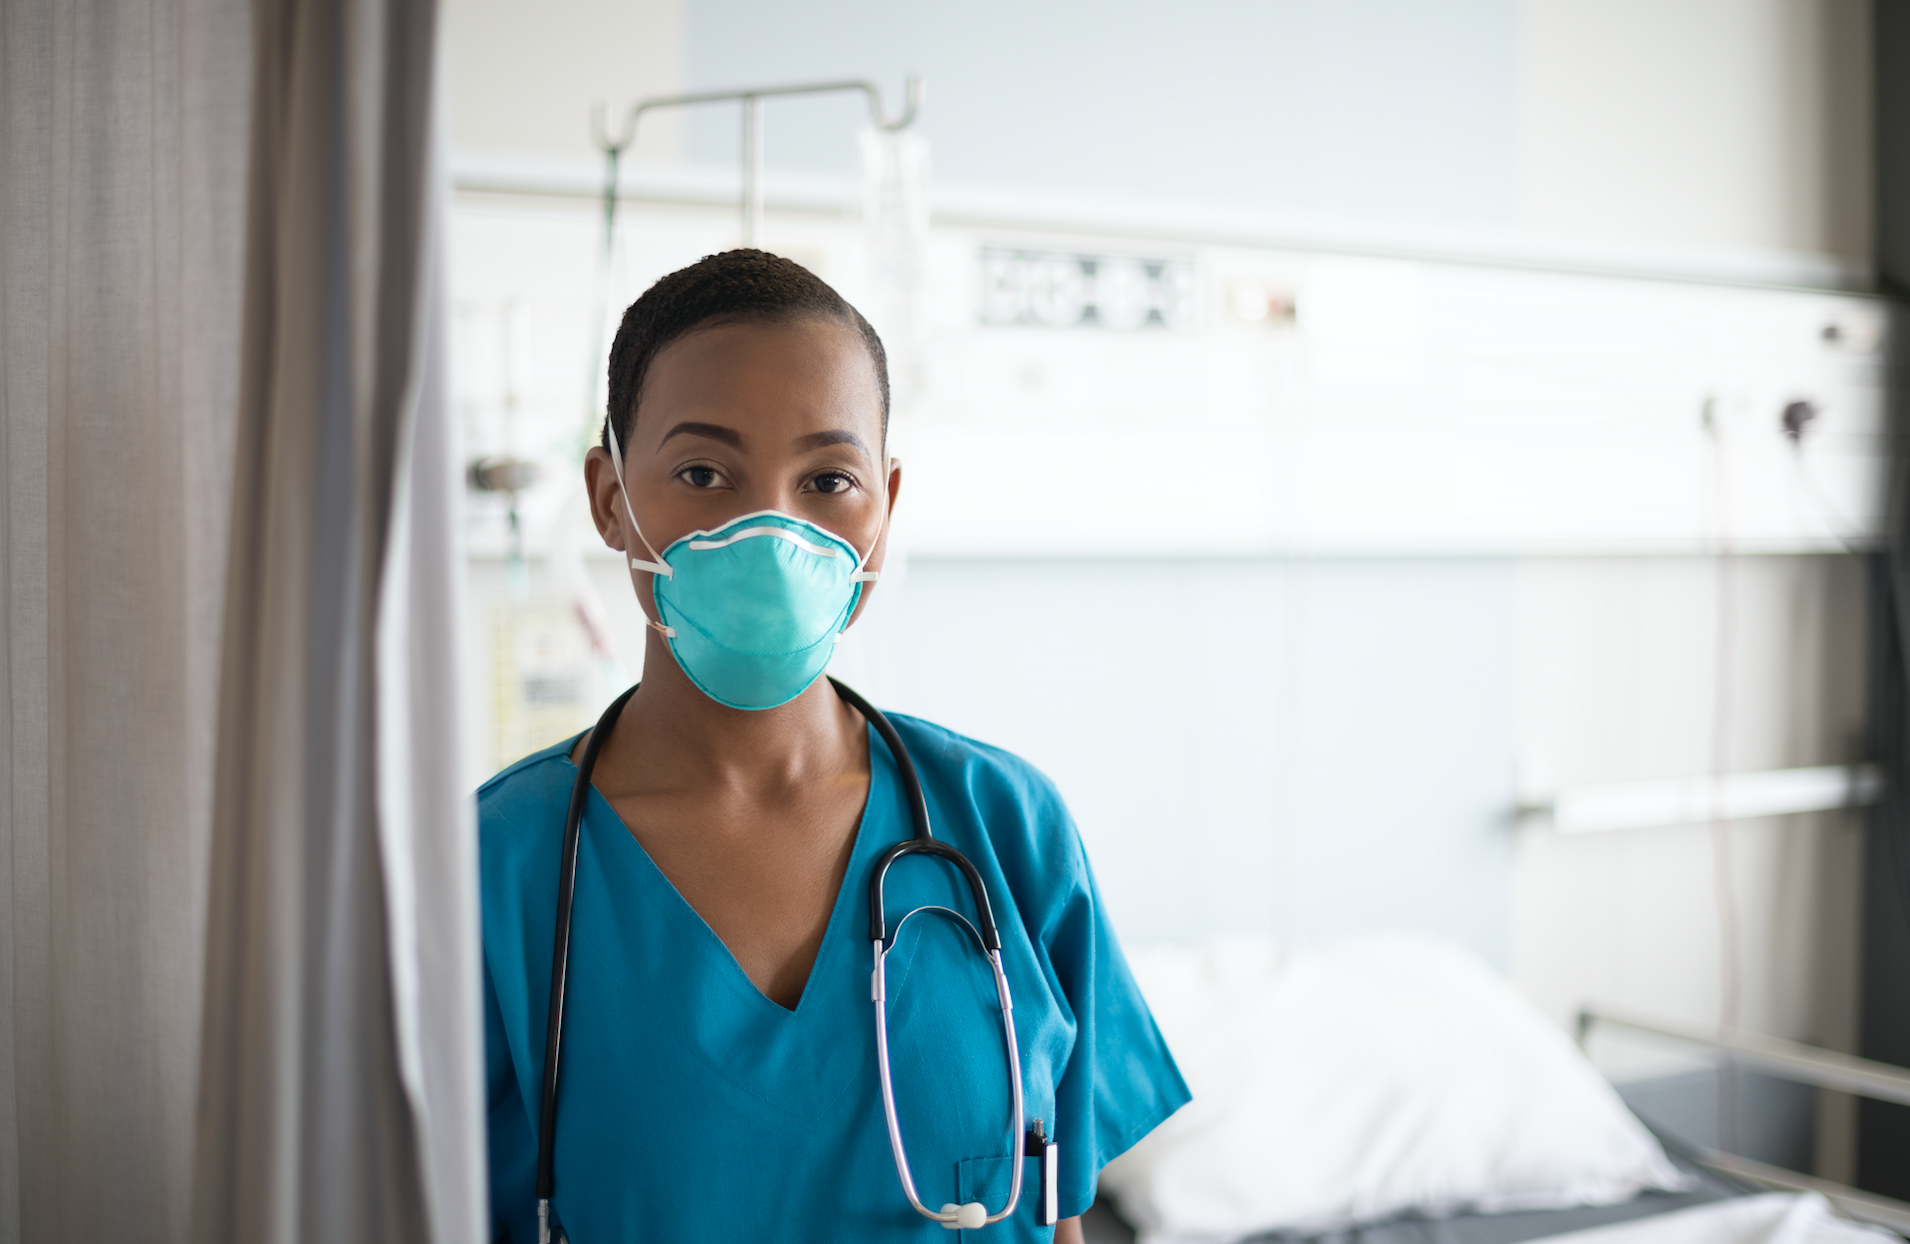 A female nurse is shown wearing an N95 mask in a hospital room